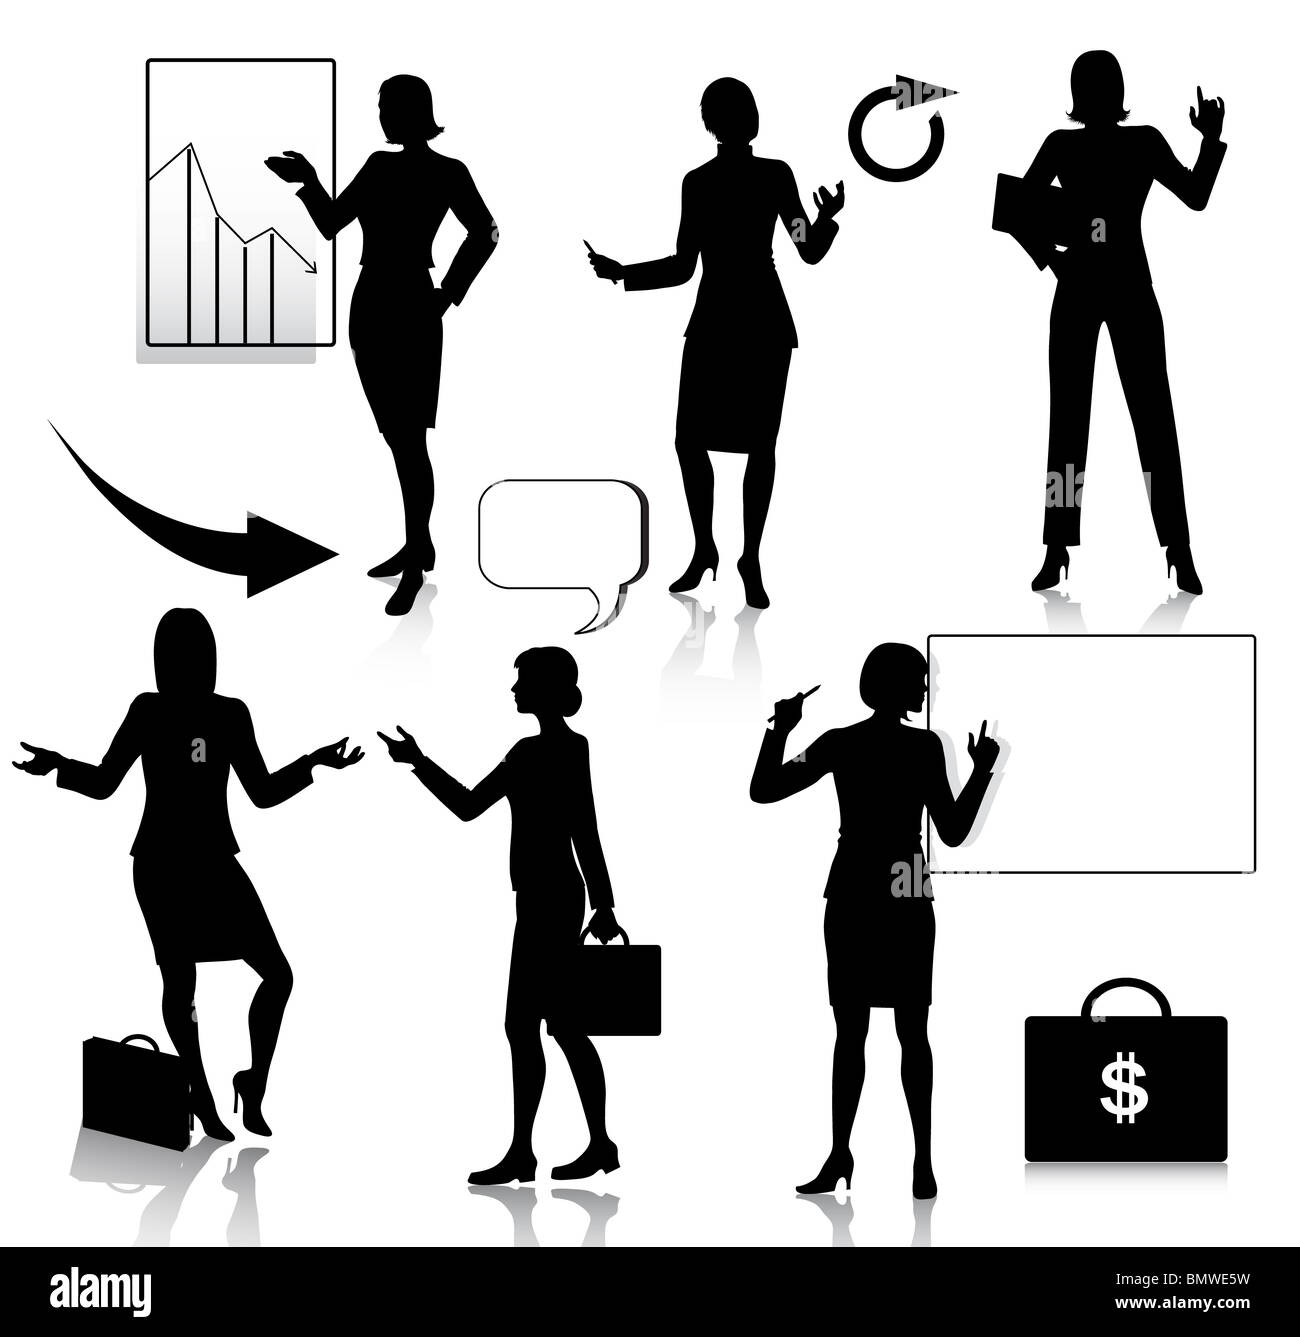 Business women silhouettes set Stock Photo